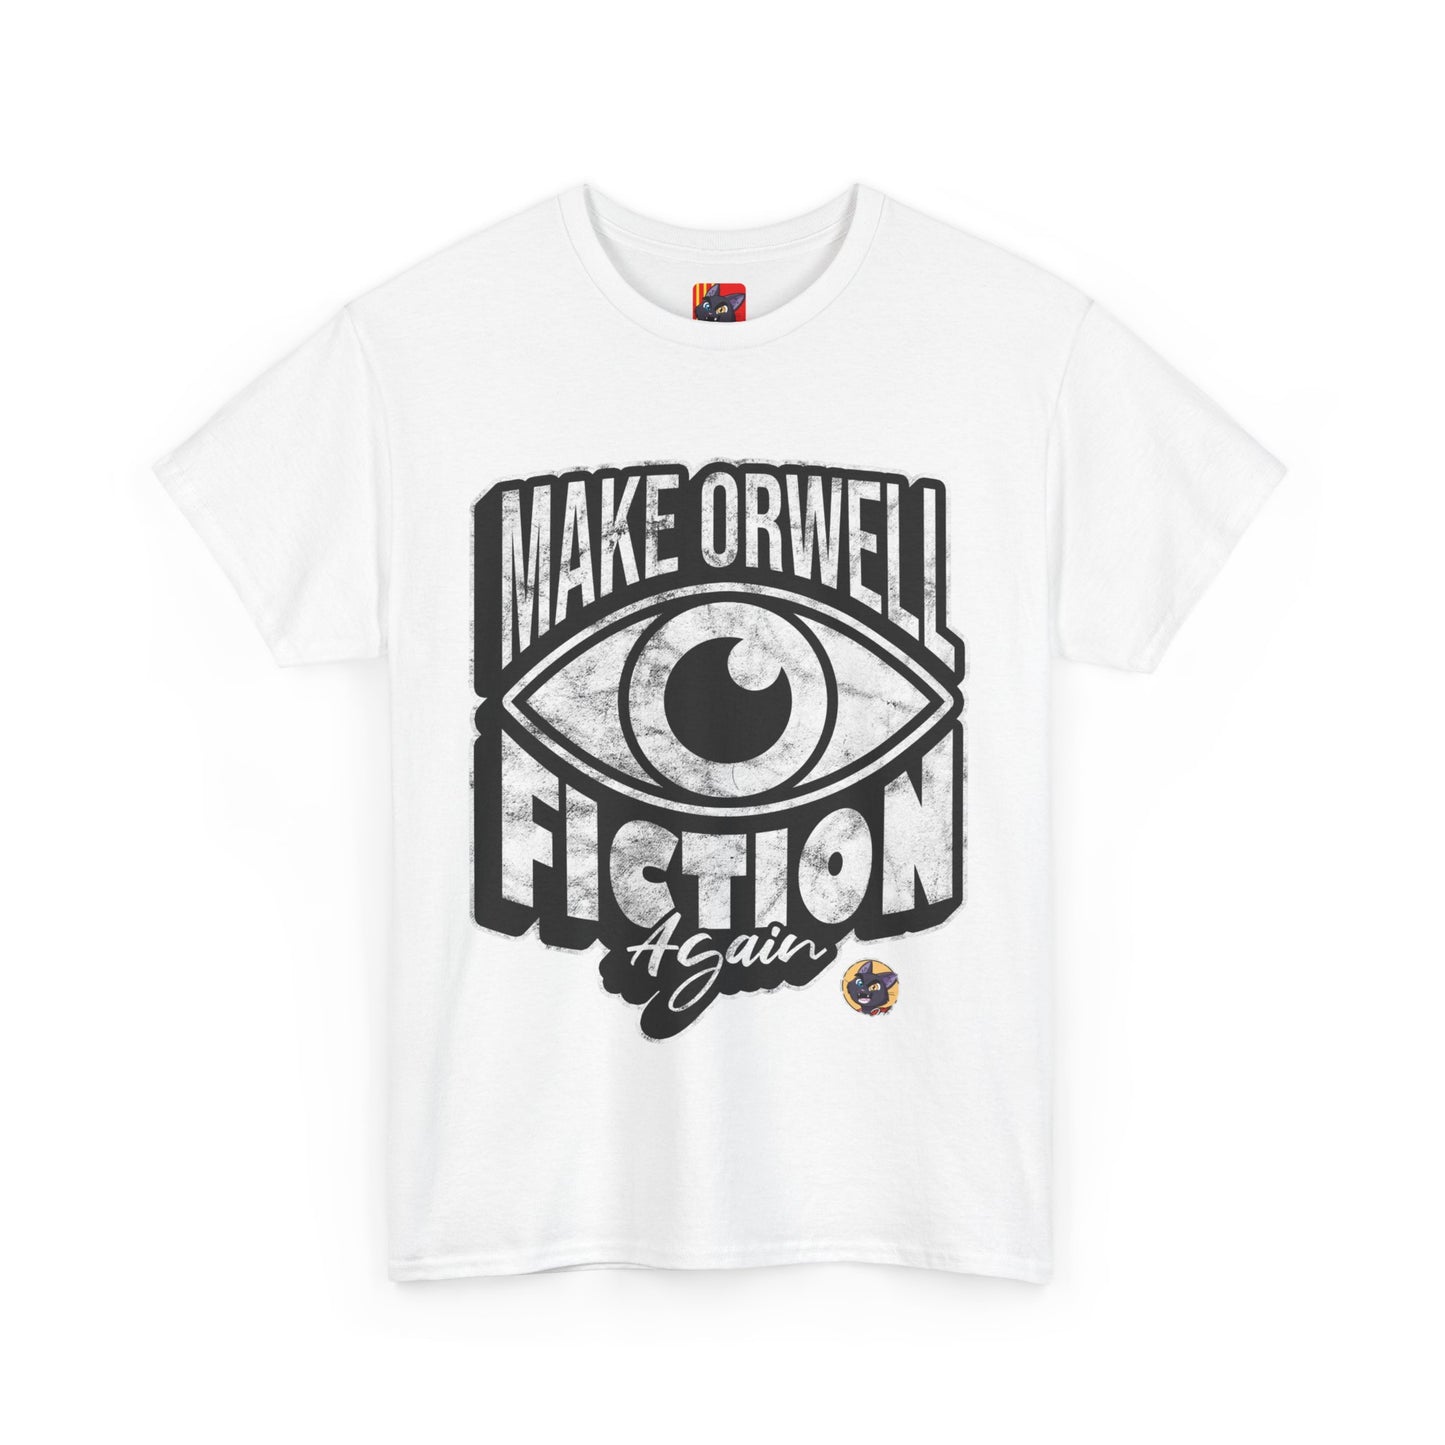 The Free Spirit T-Shirt Make orwell fiction again Jack